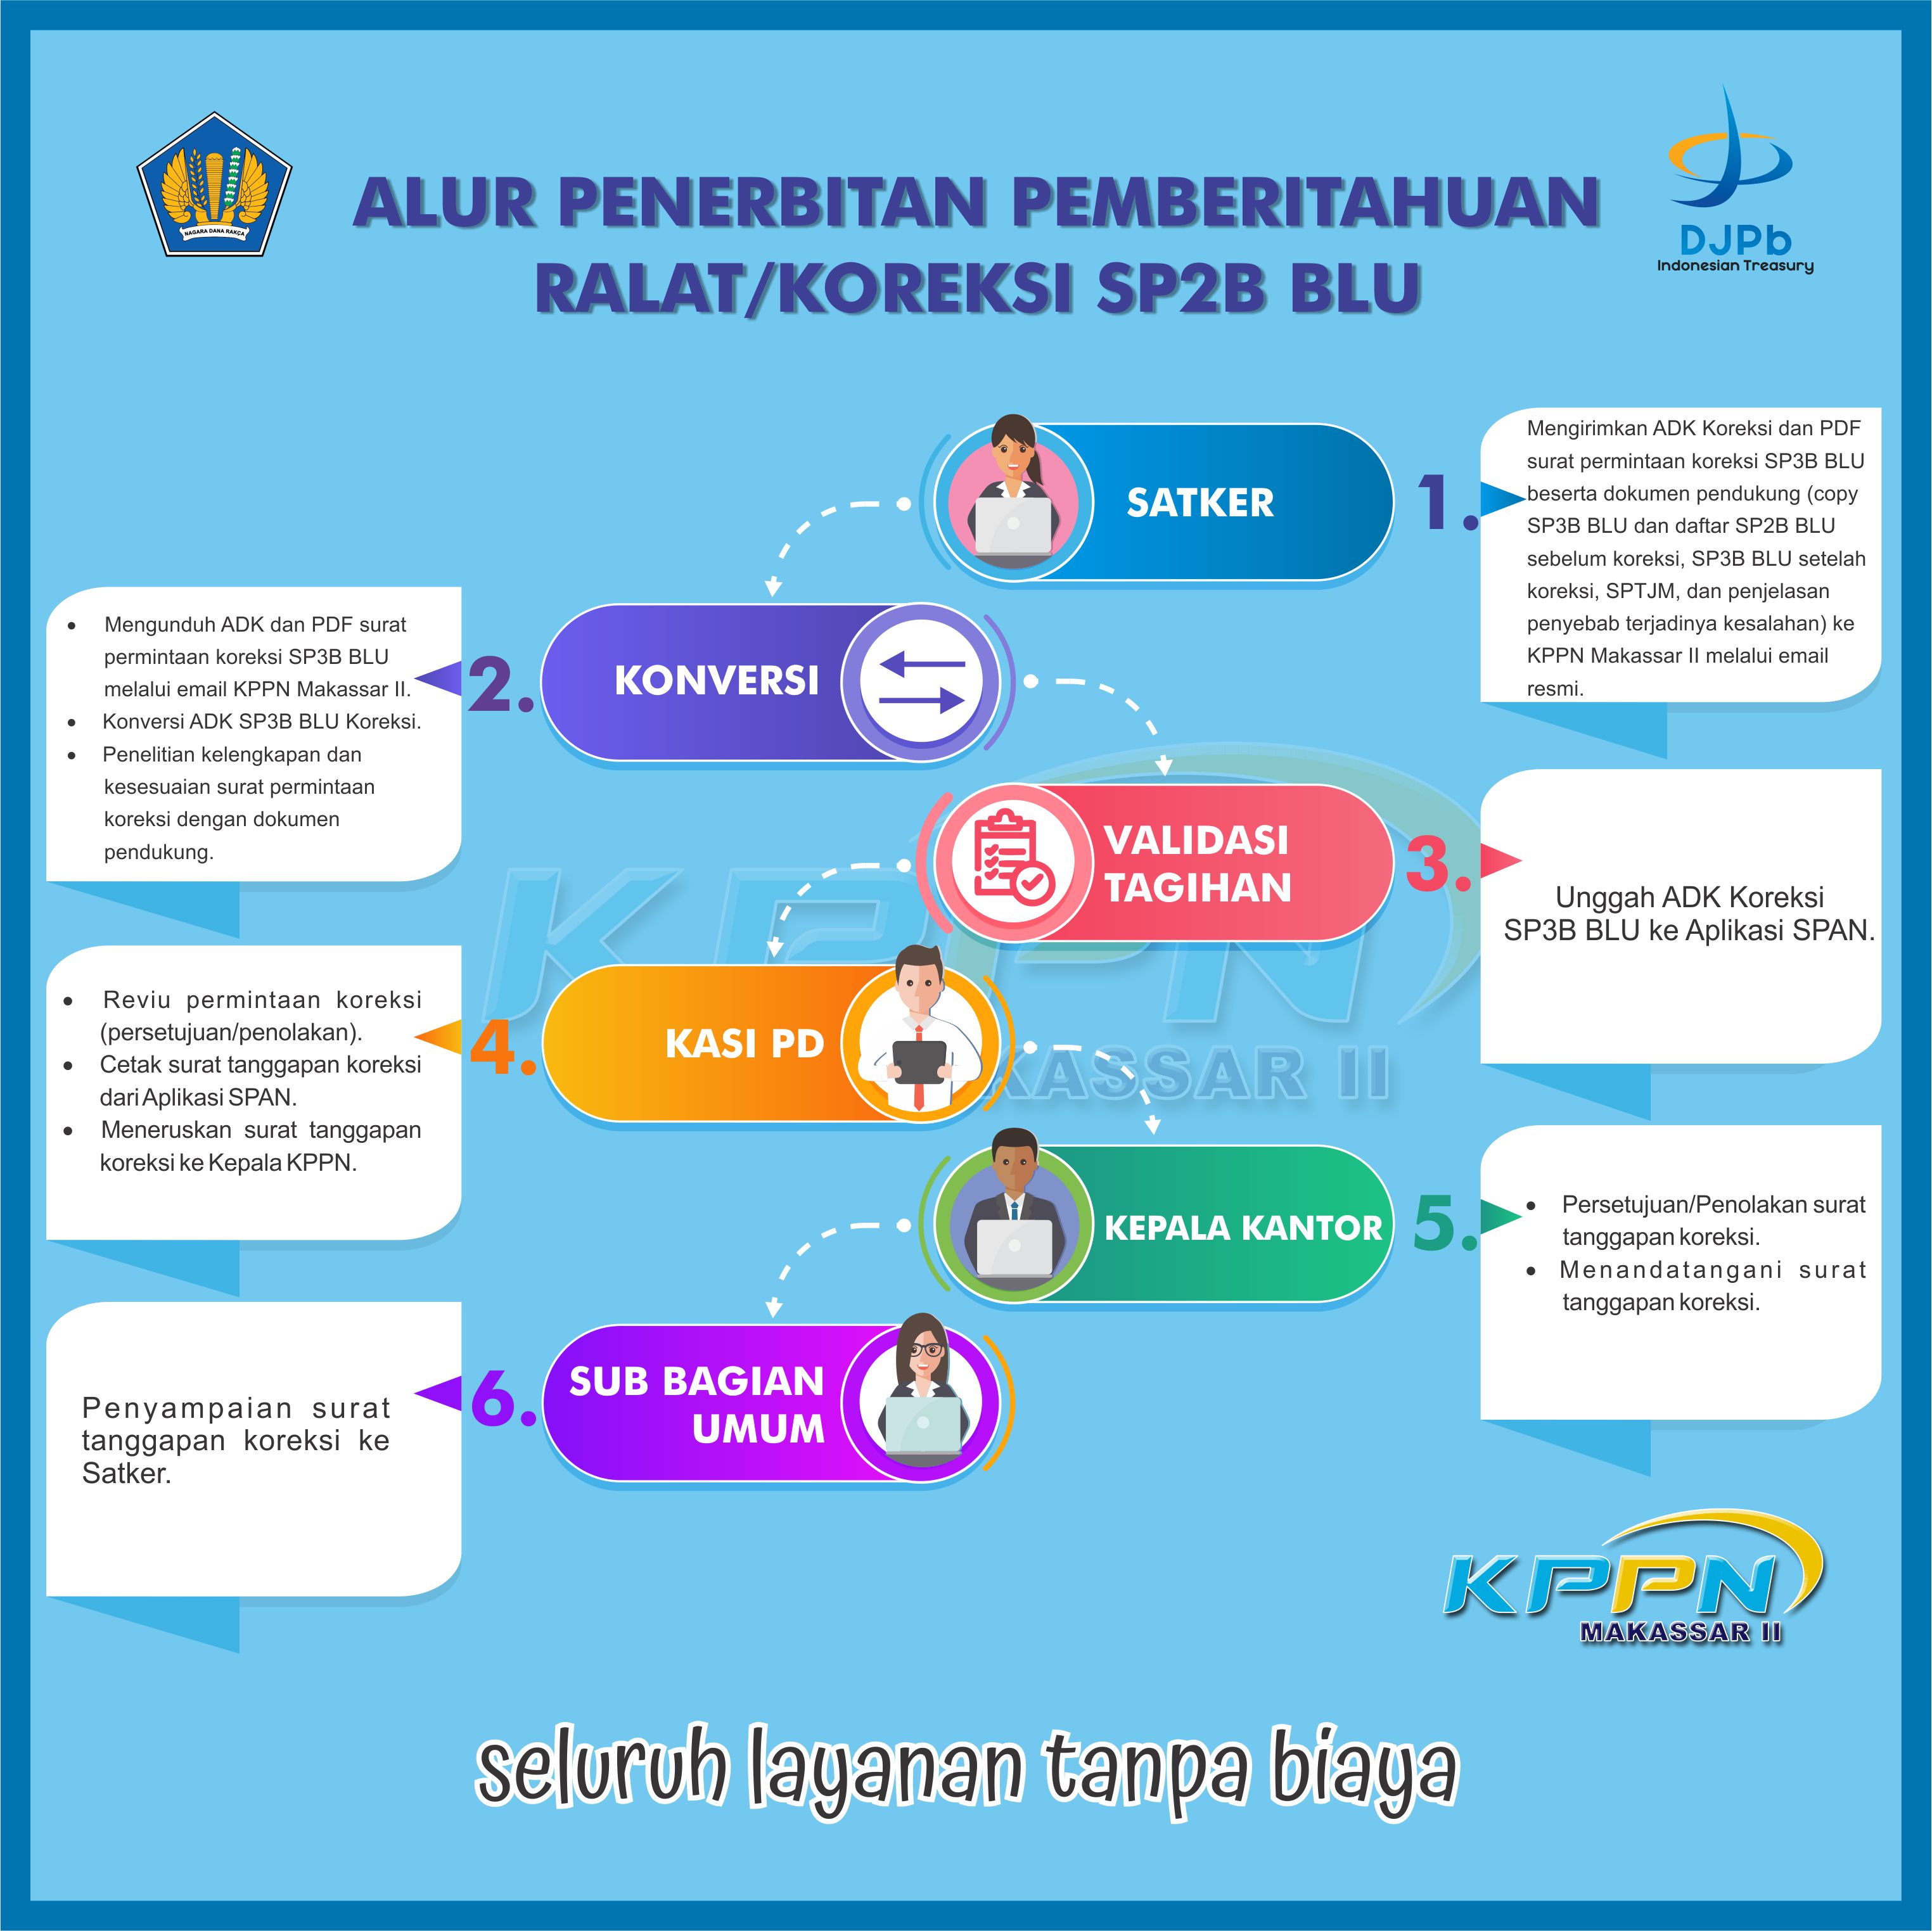 Alur Penerbitan Surat Pemberitahuan Koreksi/Ralat SP2B BLU KPPN Makassar II